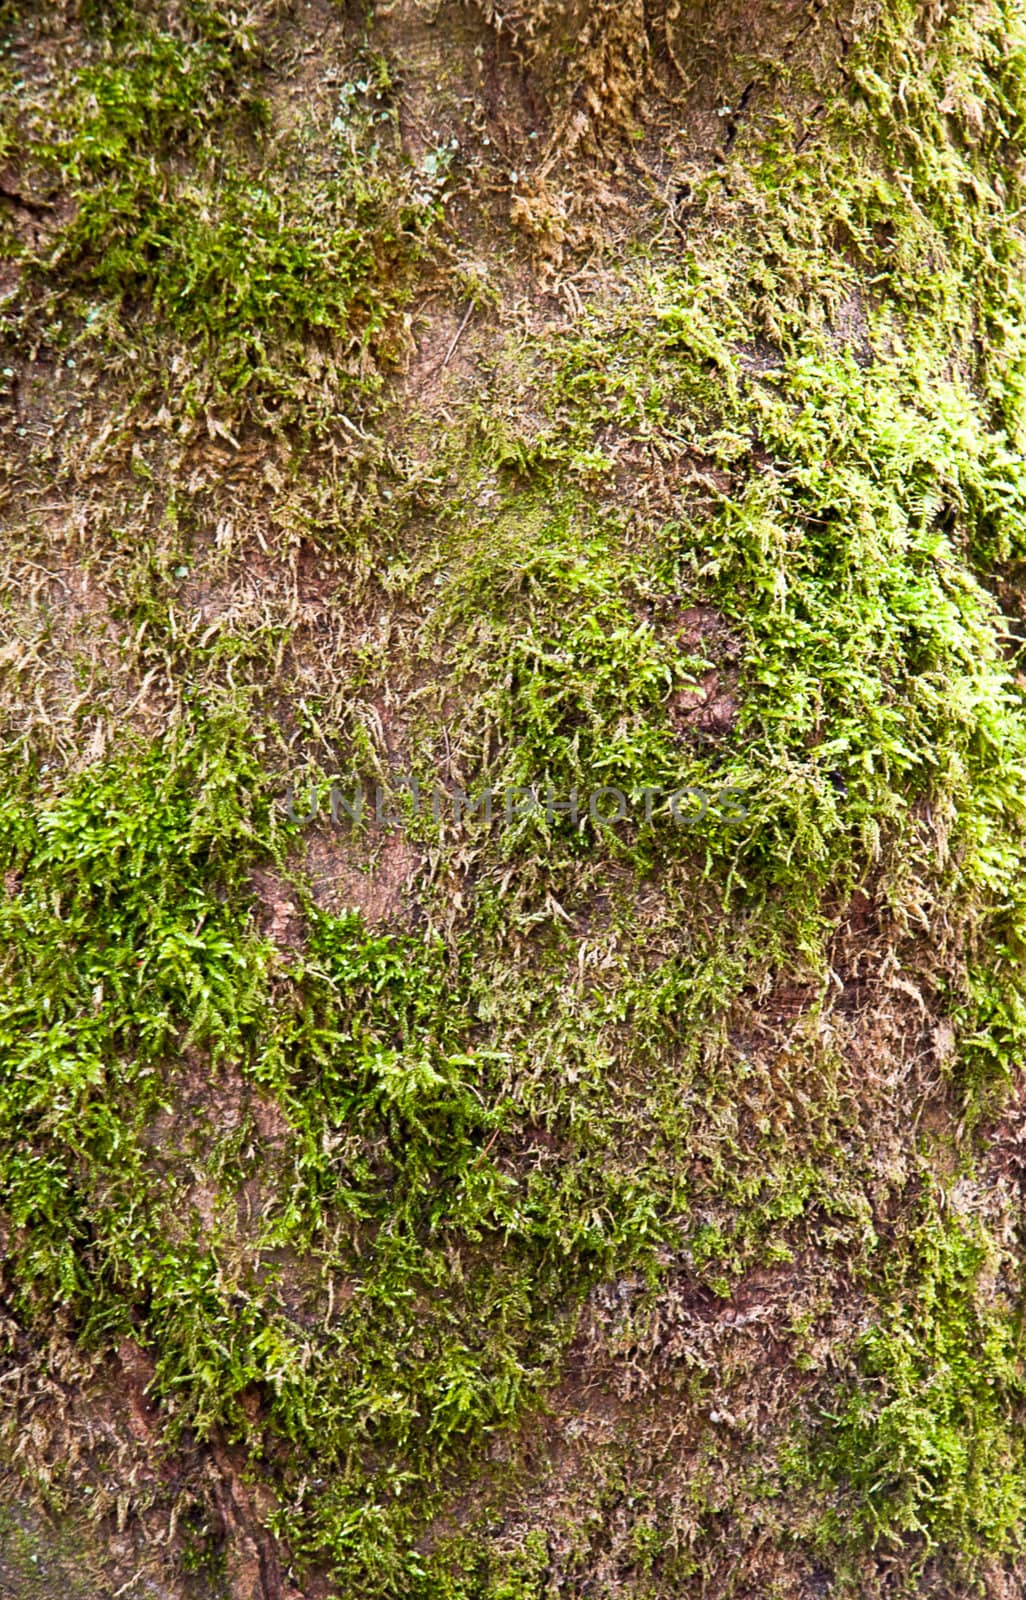 Green moss on cortex tree, texture background.